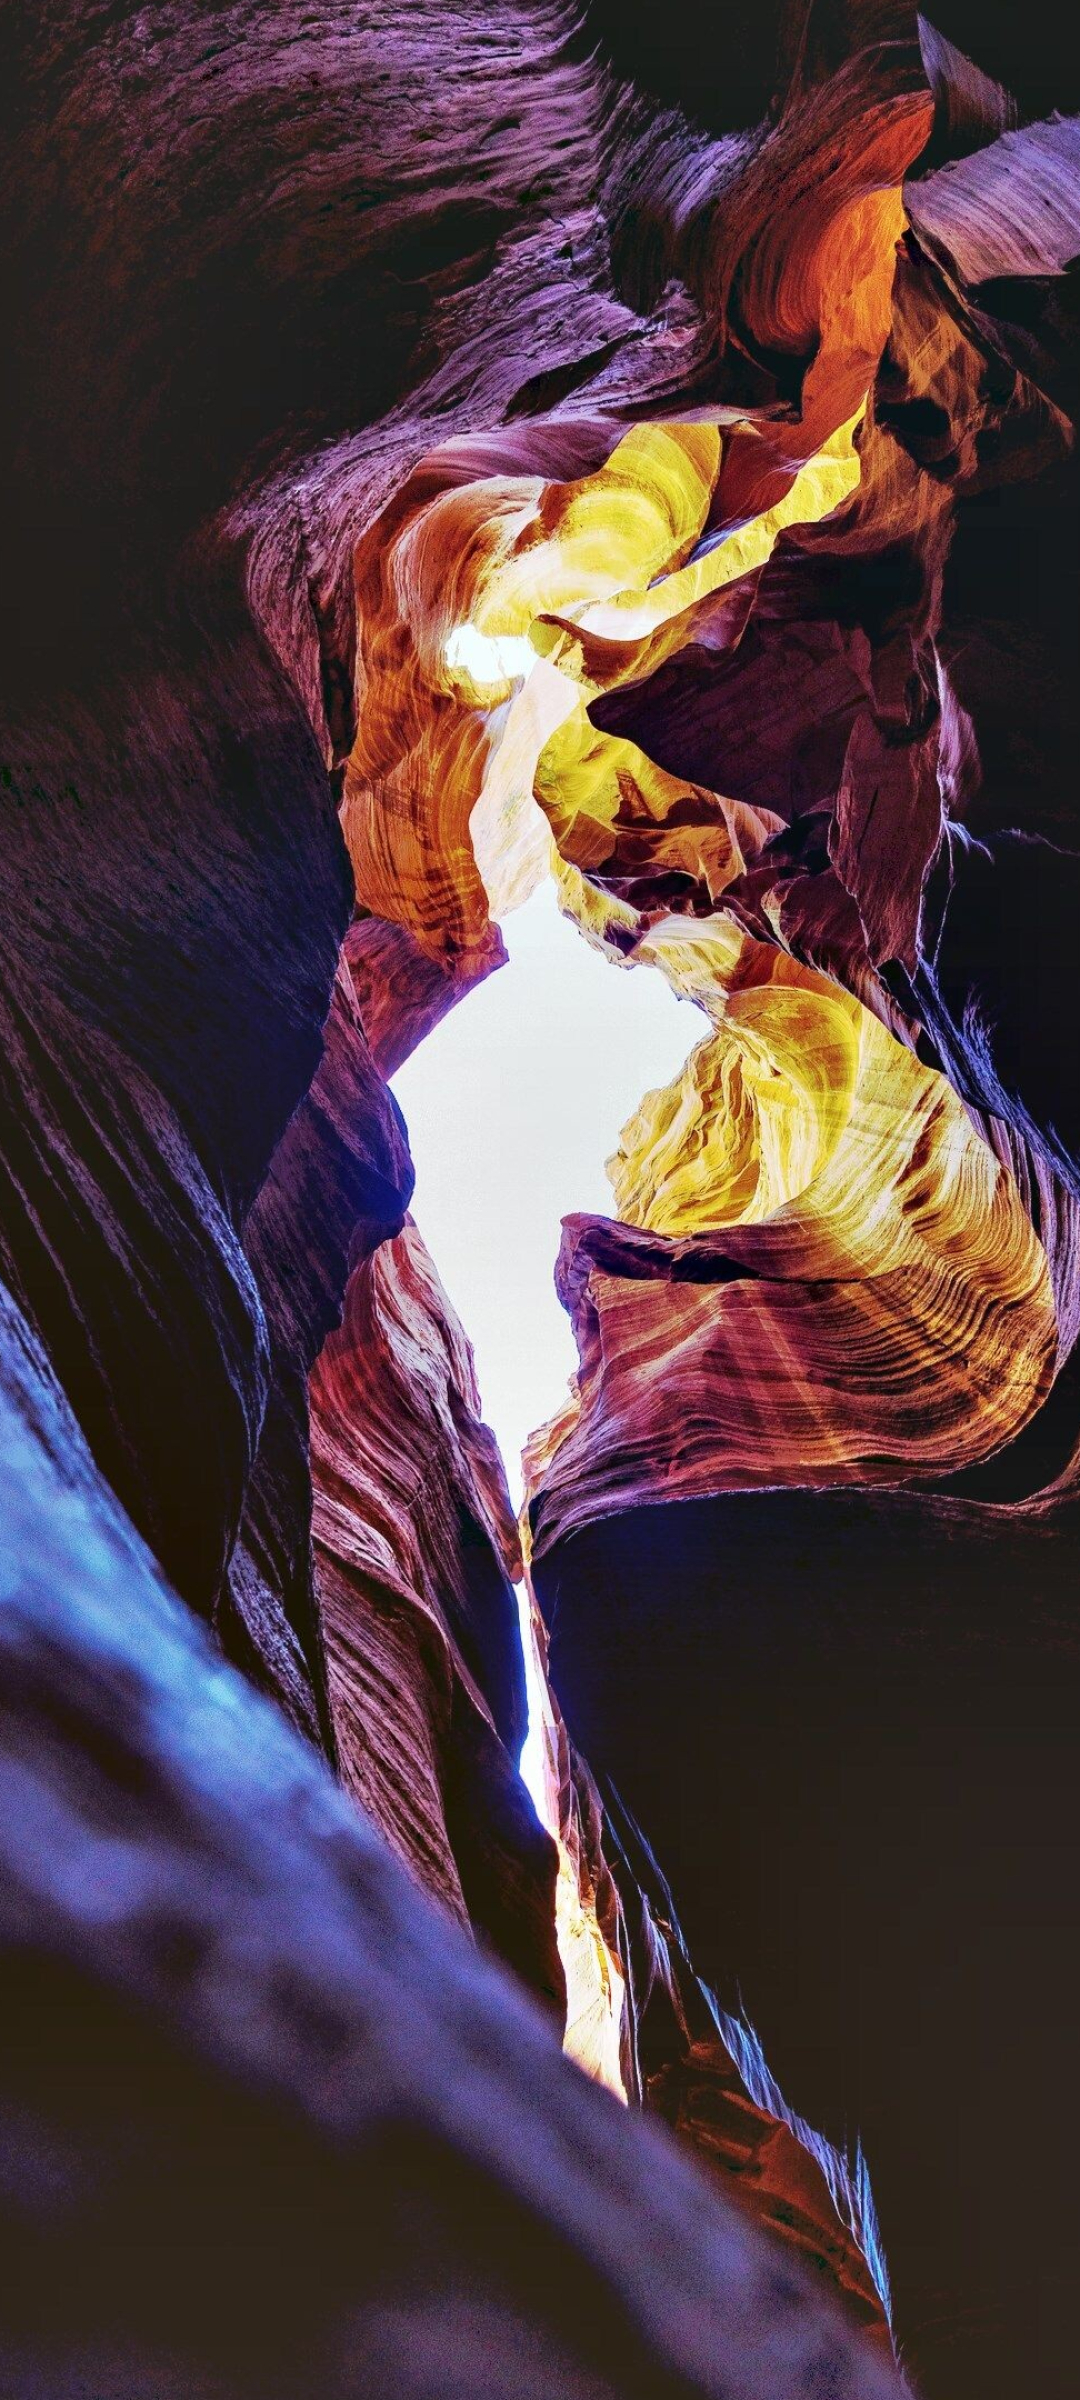 Geology: A long narrow channel or drainageway with sheer rock walls, Slot canyon. 1080x2400 HD Wallpaper.